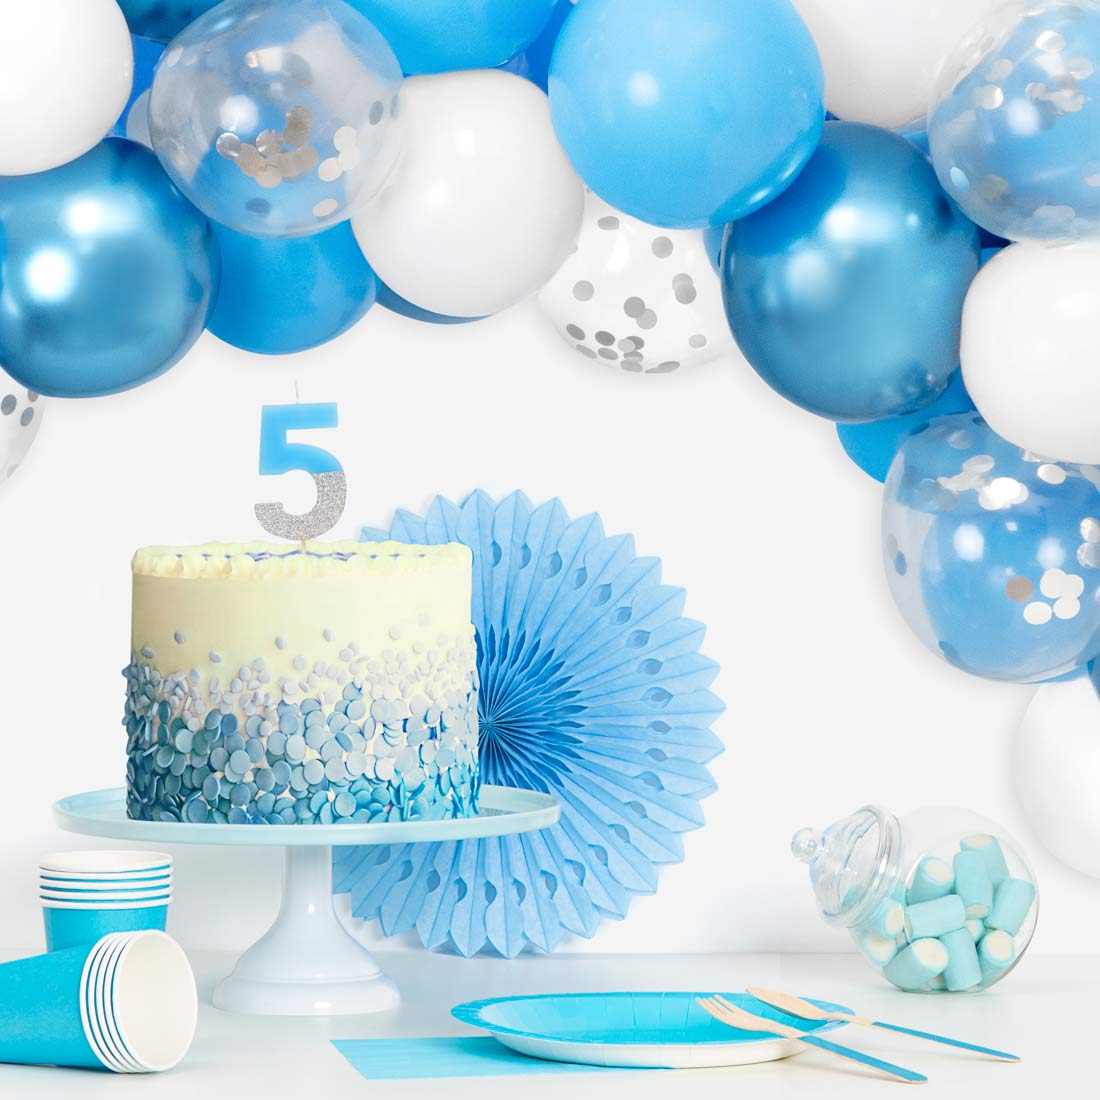 Blue, white, metallic blue and transparent balloon set with confetti